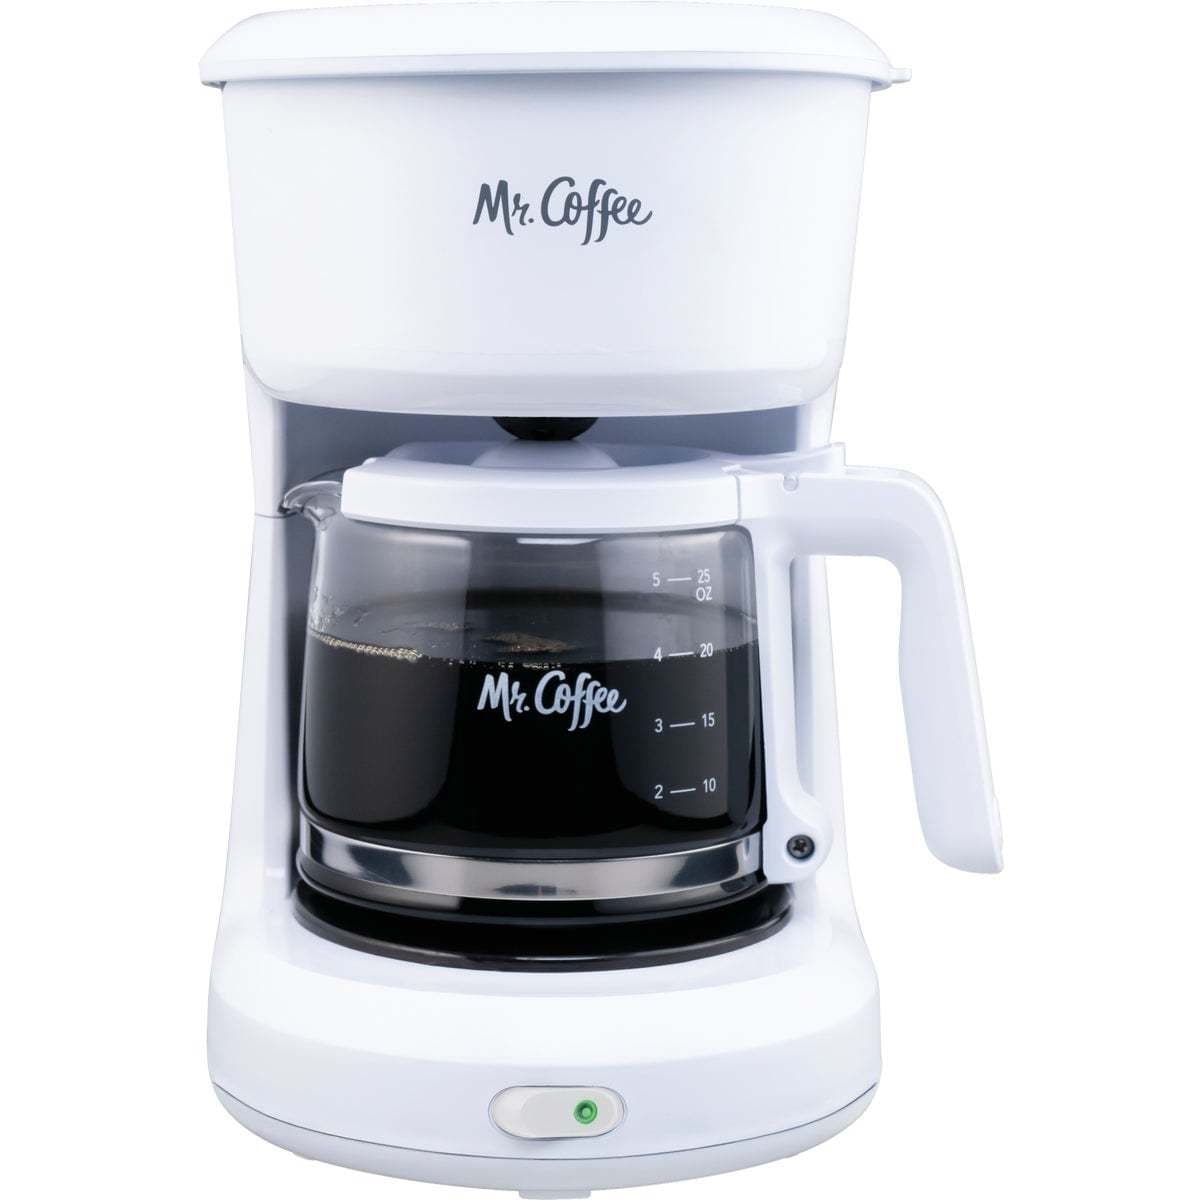 Krups KM202855 FCM Simply Brew 5 Cup Drip Coffee Maker 